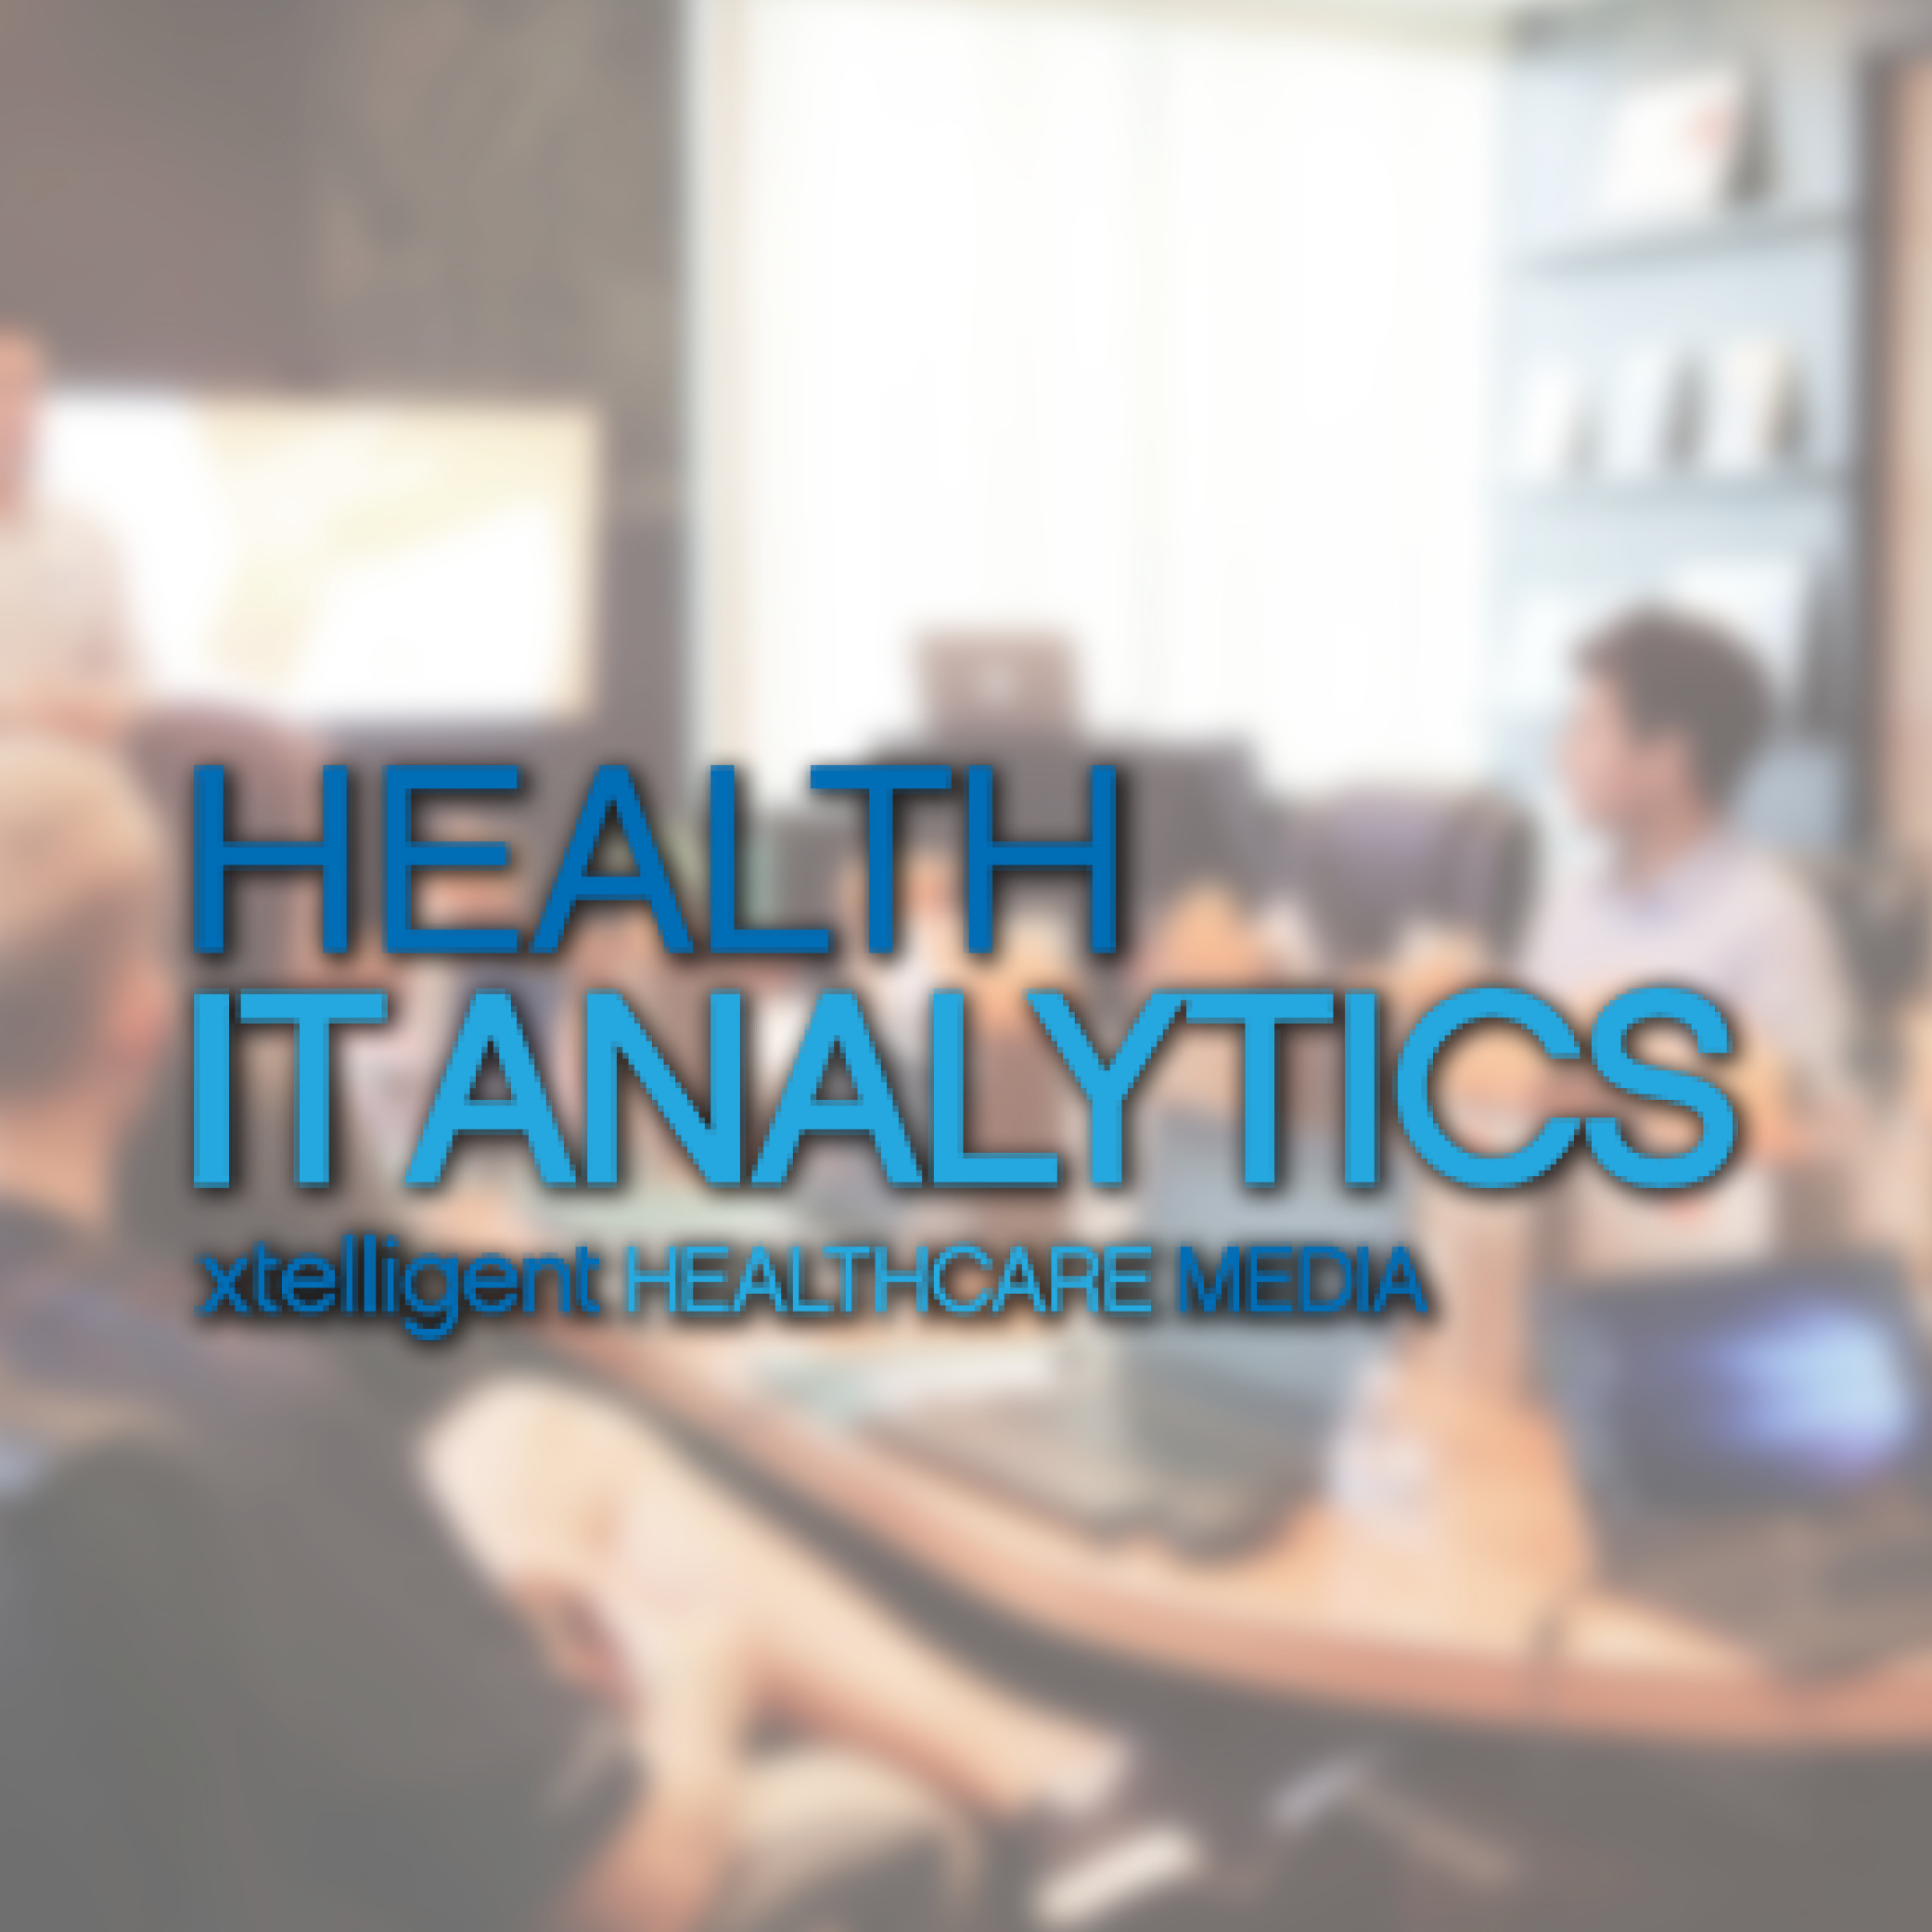 Health IT Analytics